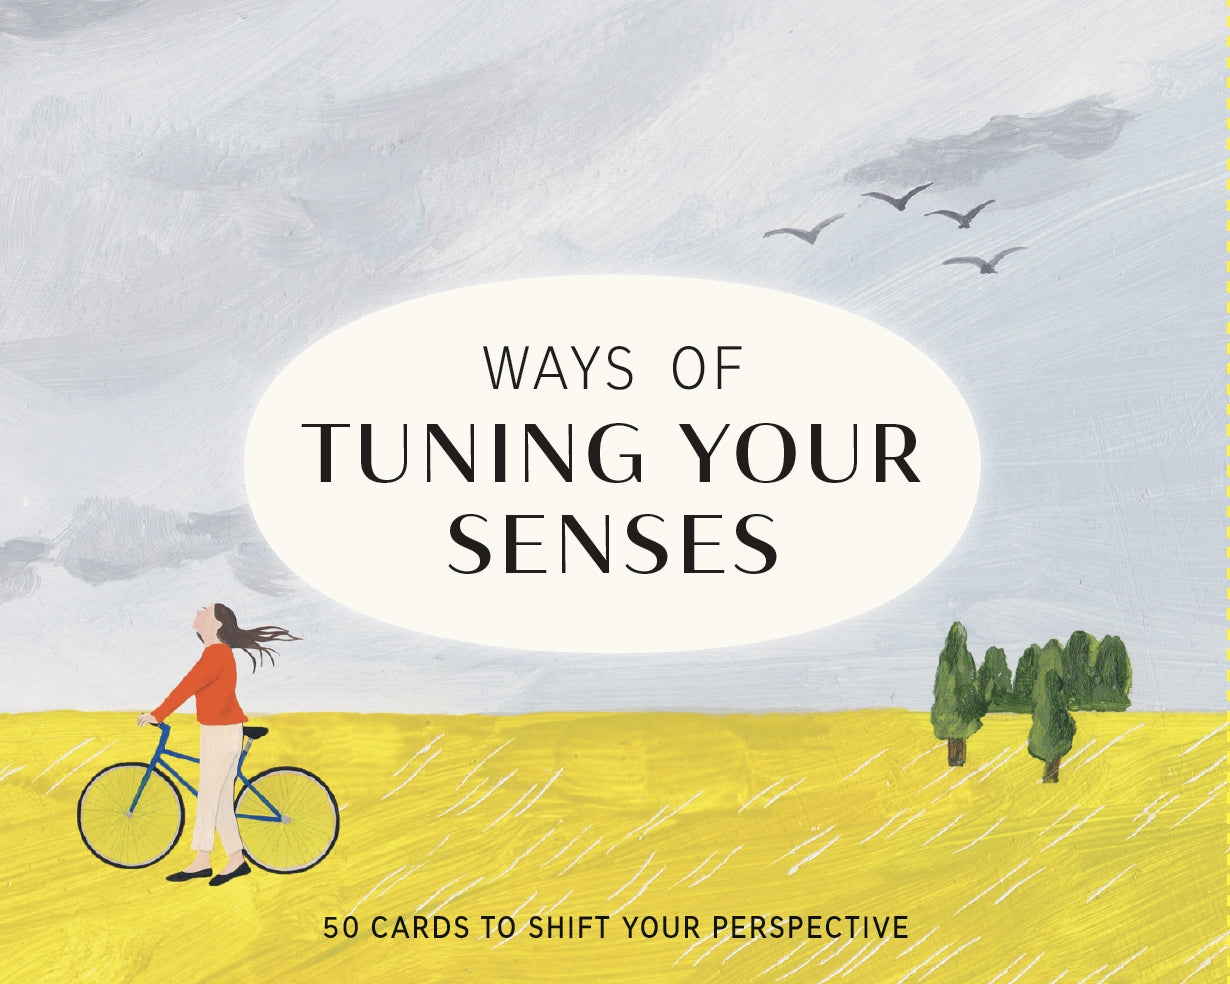 Ways of Tuning Your Senses by Shuku Nishi